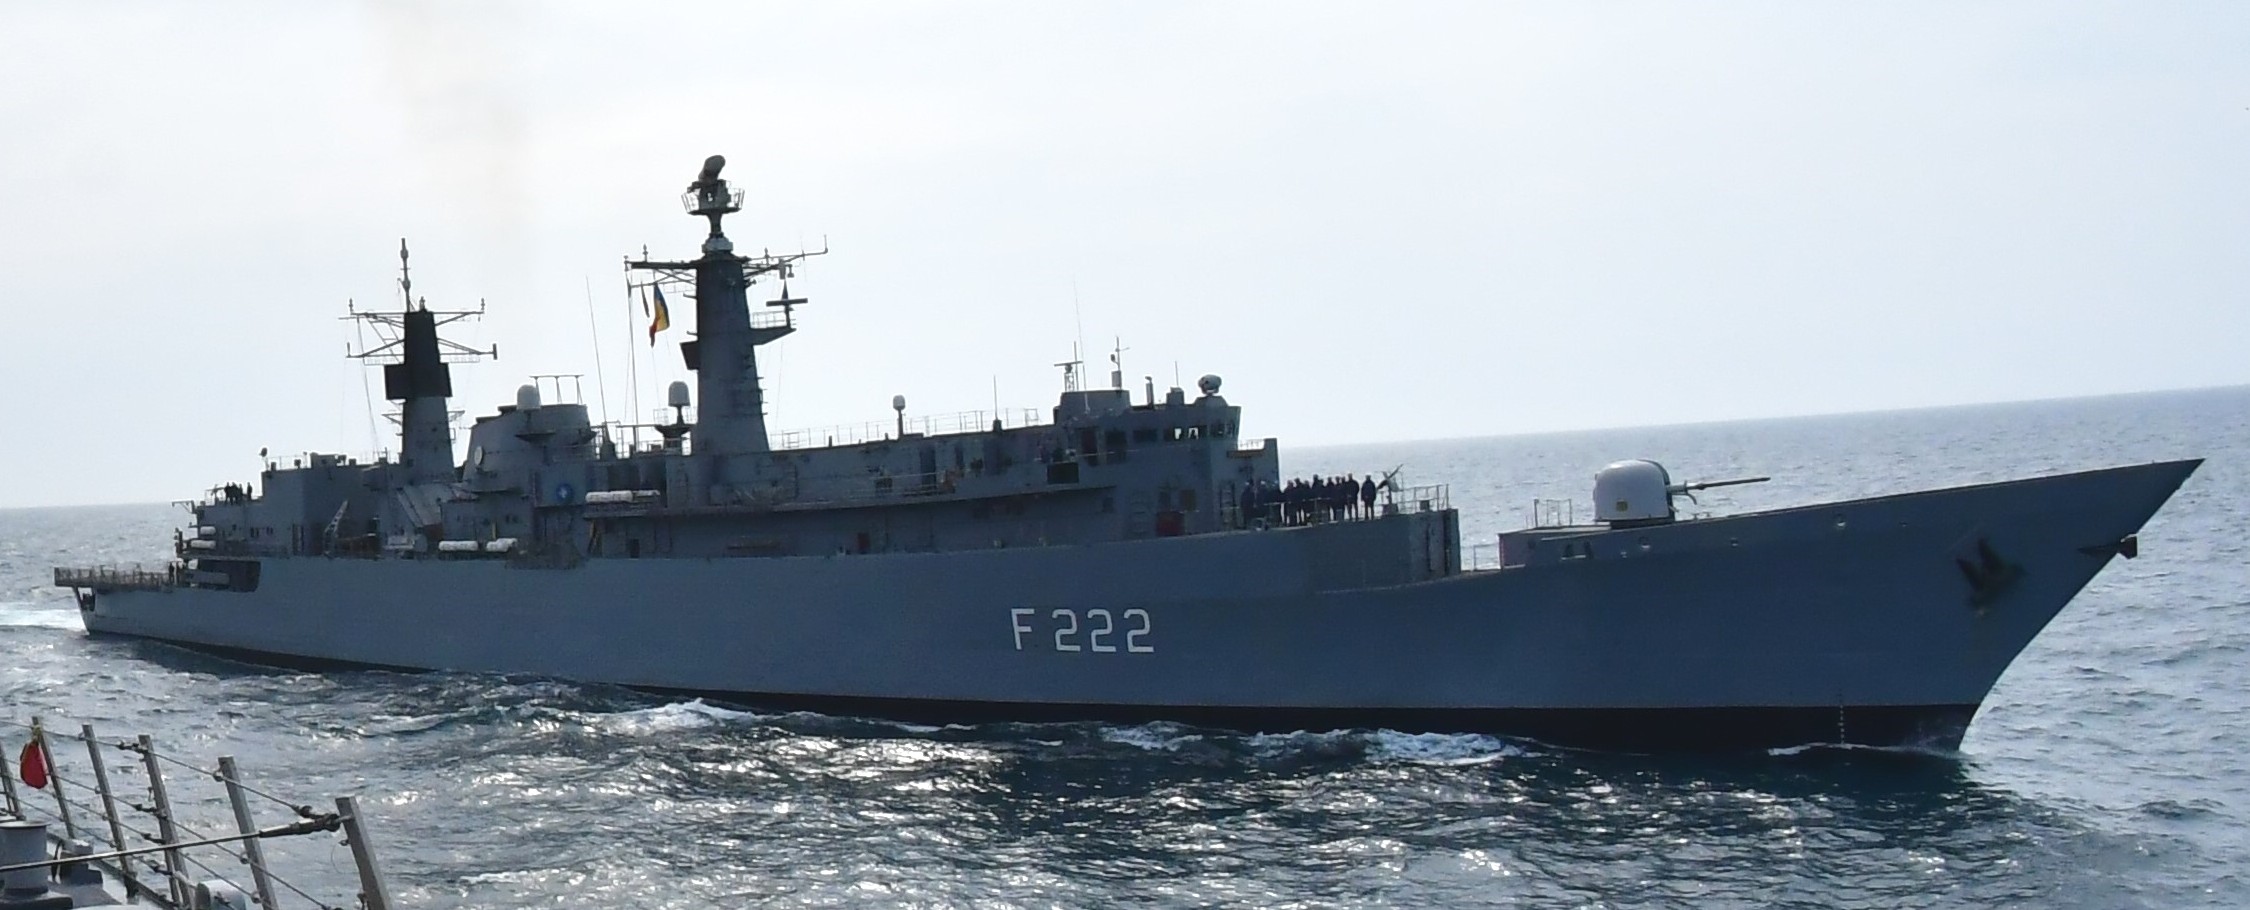 f-222 ros regina maria frigate type 22 broadsword class romanian navy 06